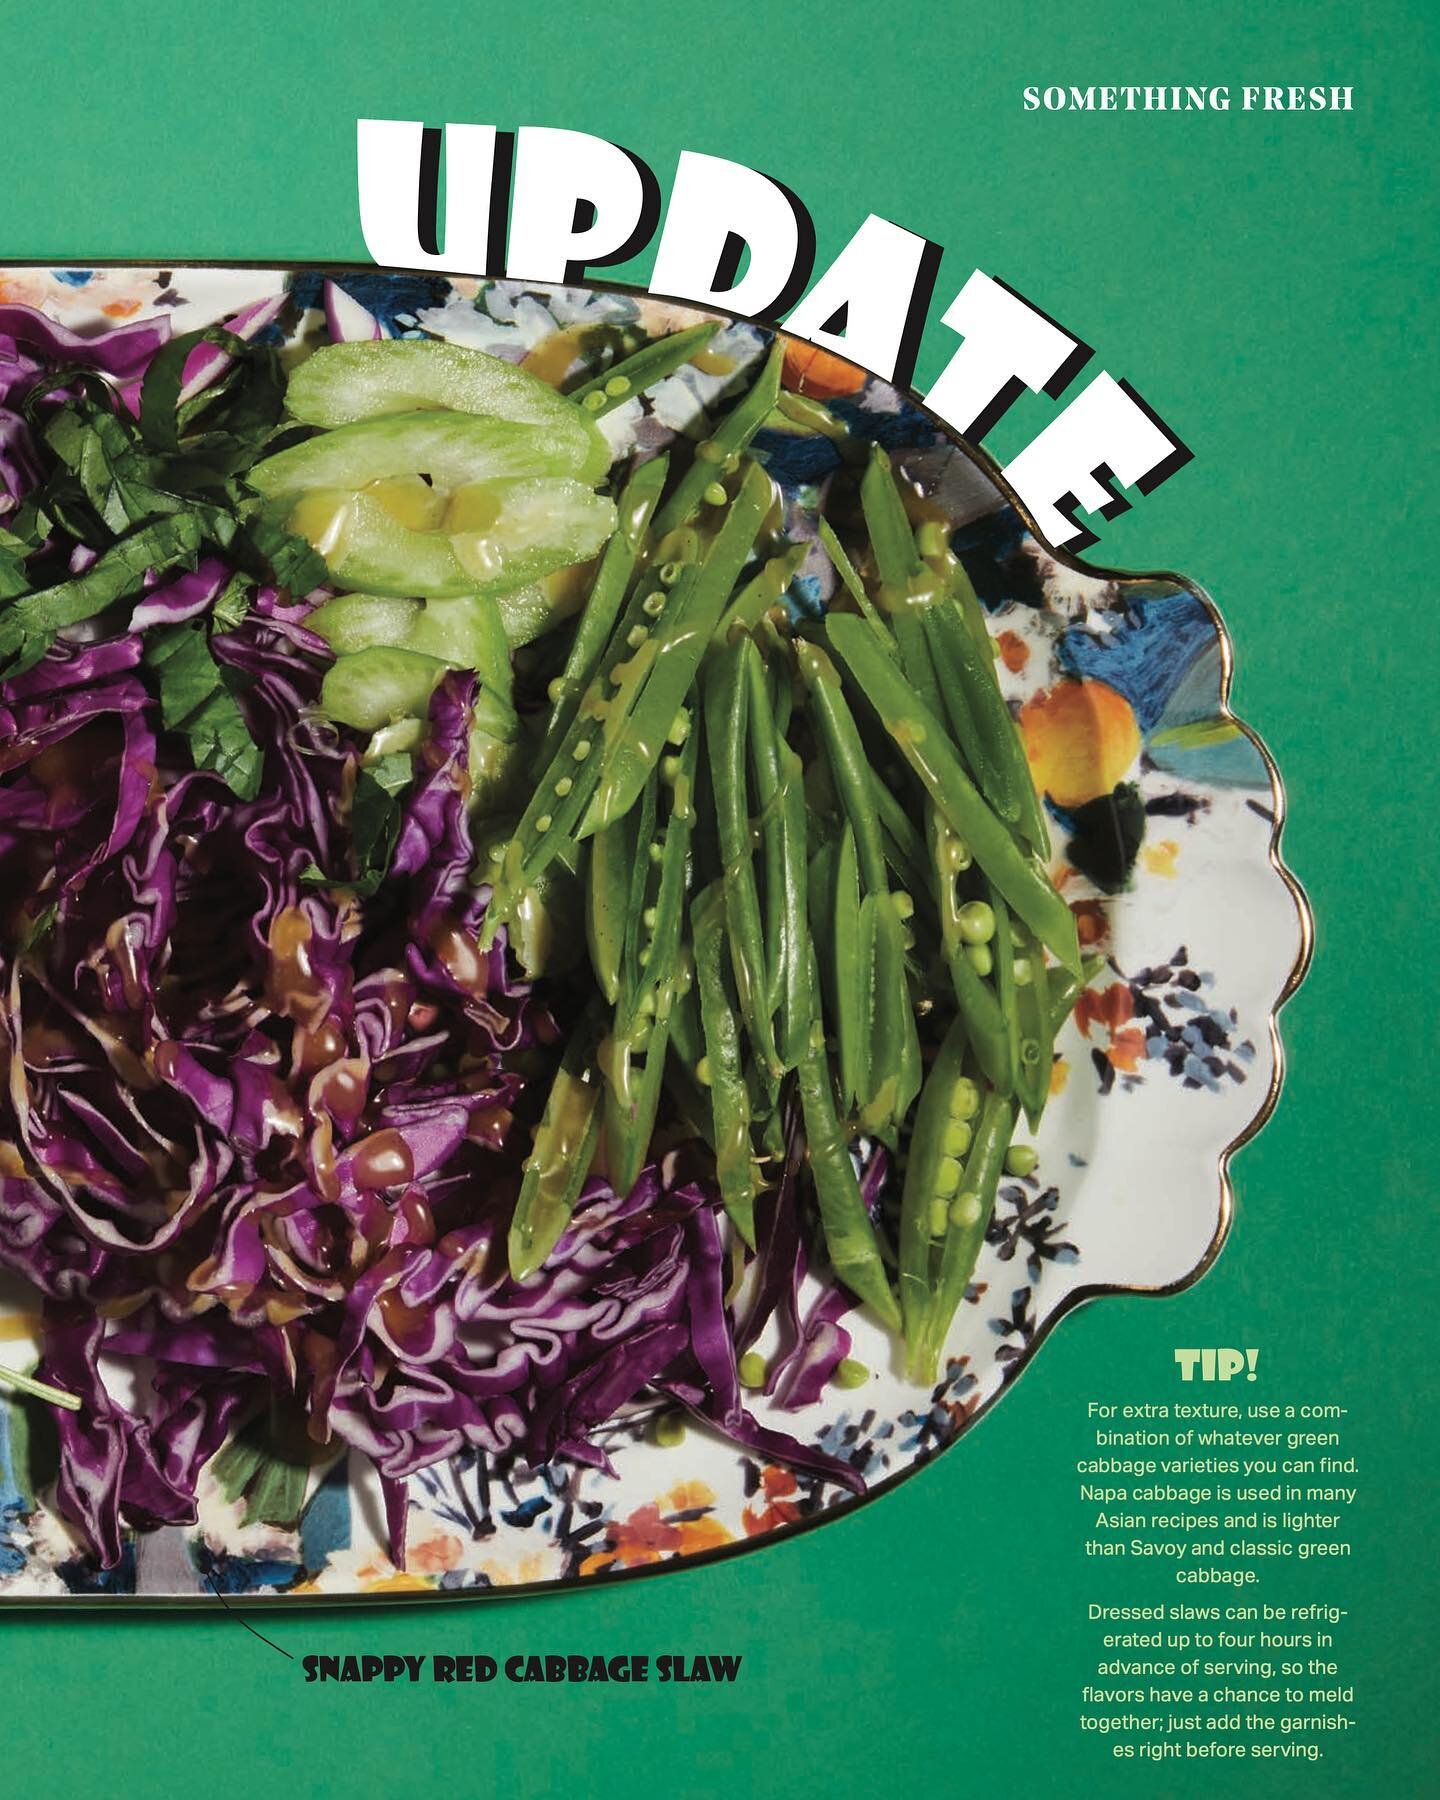 Colesaw on green 🥗
-
-
Shot for @fleishigsmag Issue 014
Editor in Chief/Stylist: @shifraklein -
-
#fleishigs #fleishigsmag #food #foodie #foodphotography #foodmagazine #tearsheet